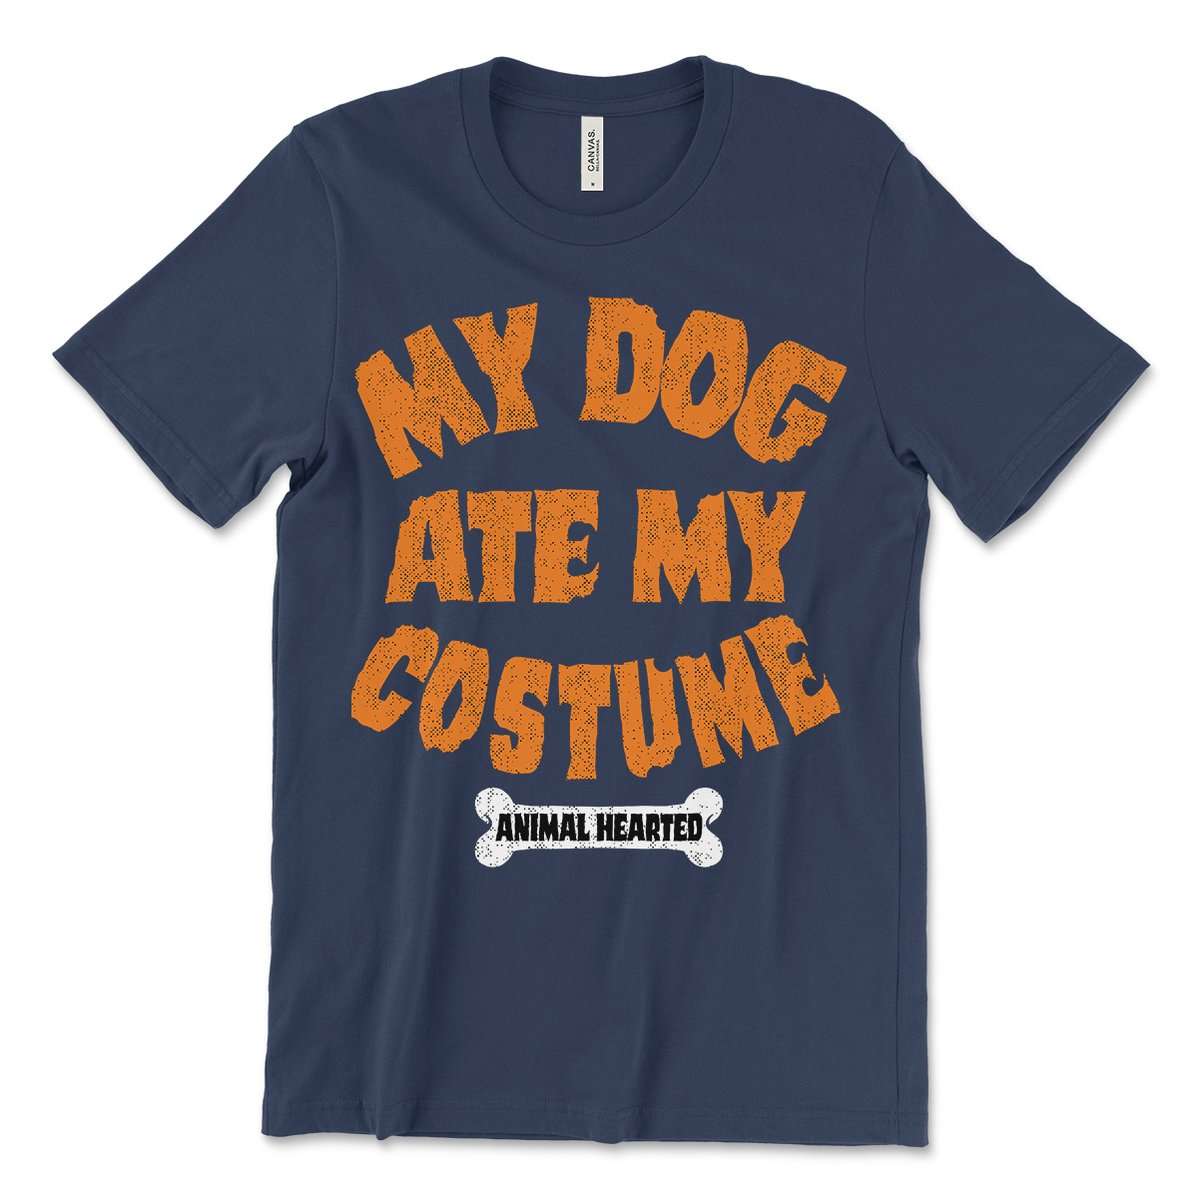 My dog ate my costume - Animal hearted, Halloween costume festival